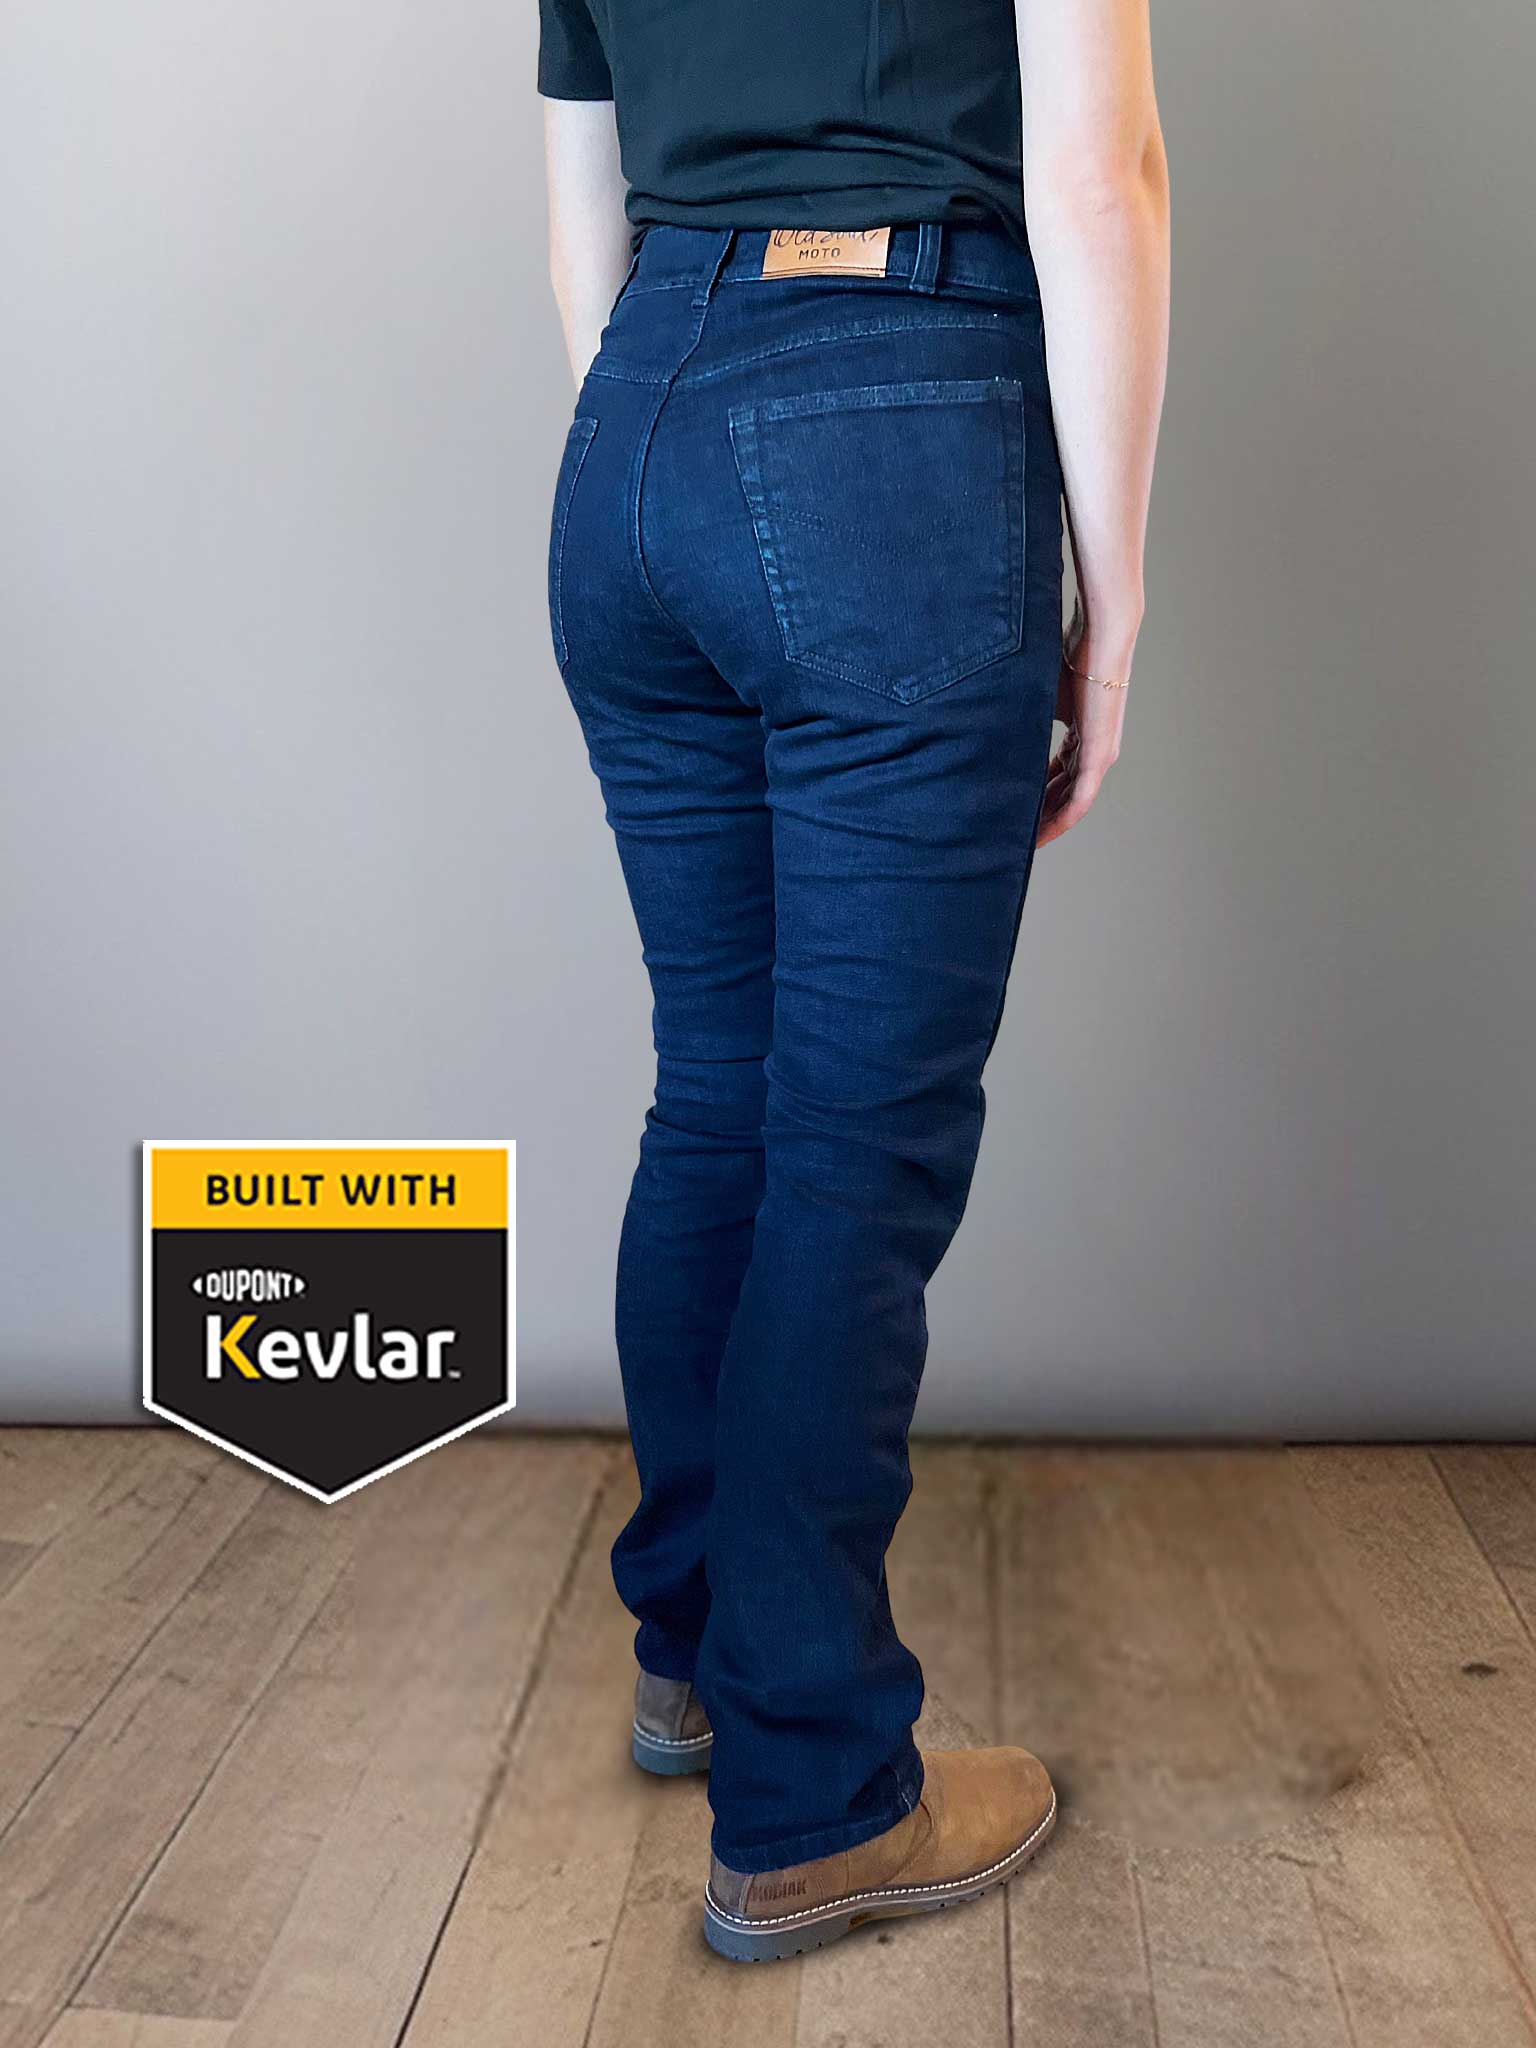 A-Pro Jolie Lady Kevlar Jeans Motorcycle Women - Price - AlexFactory